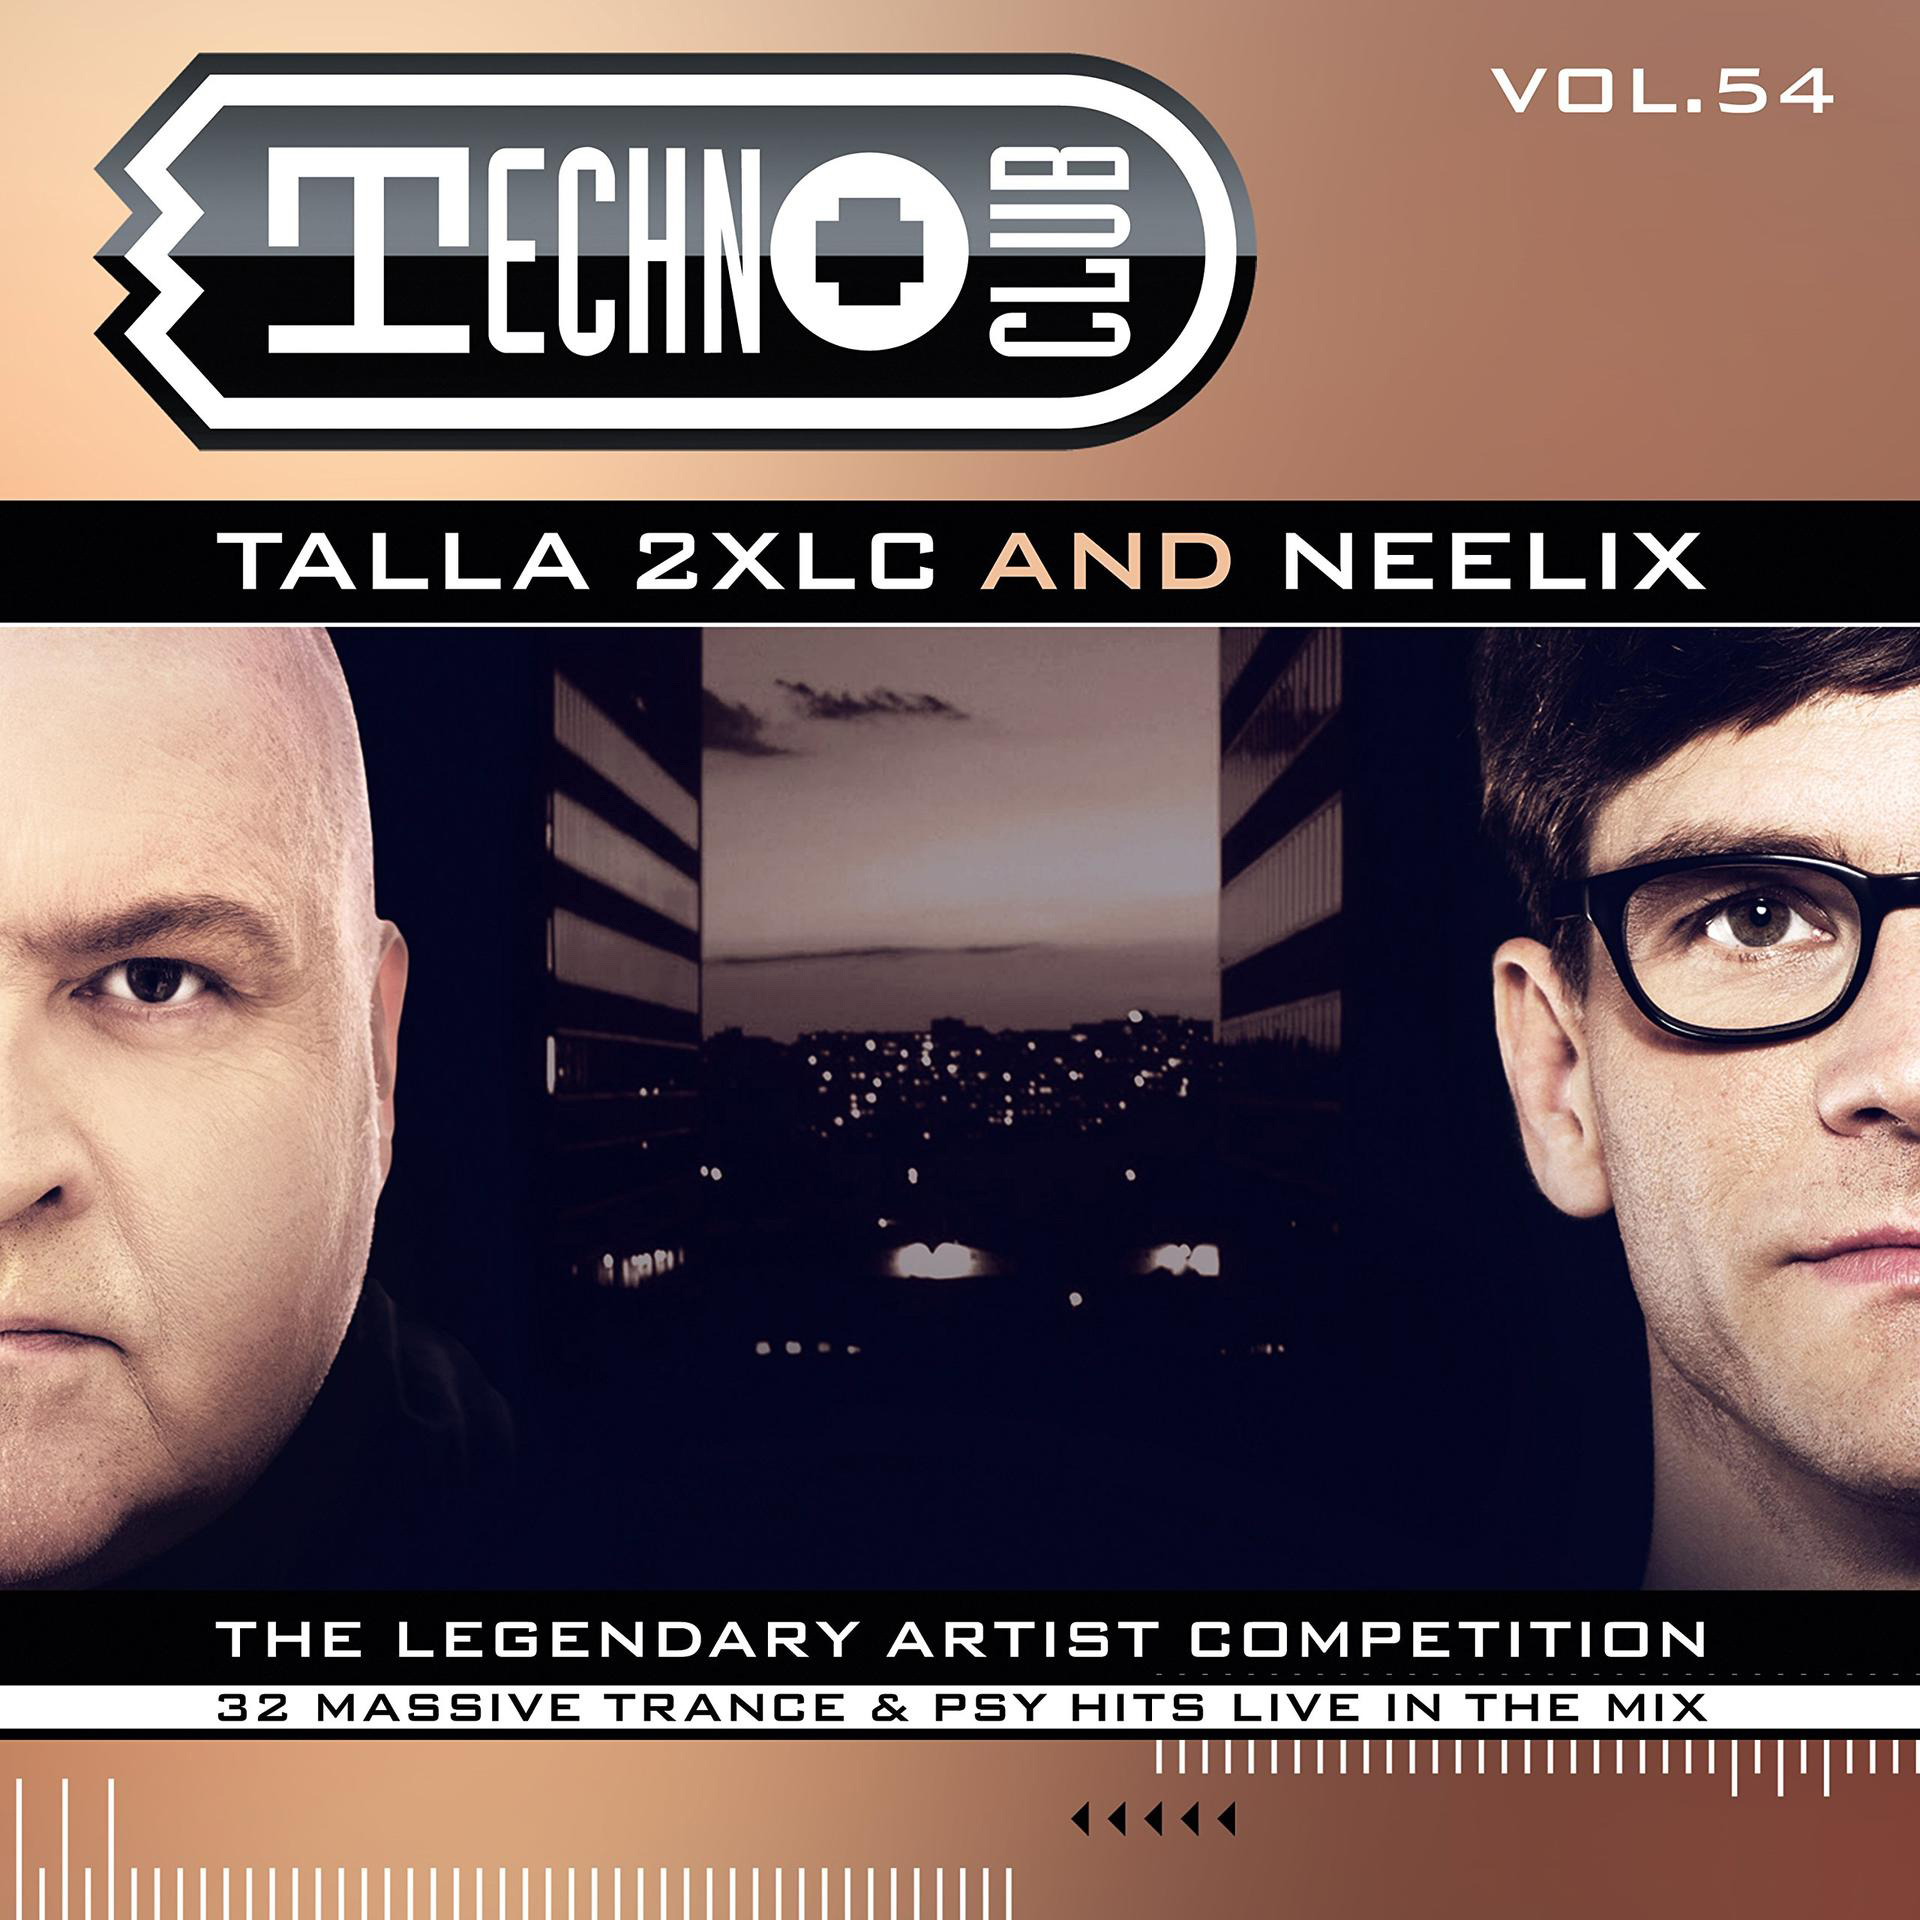 Talla 2XLC & Neelix, VARIOUS - - (CD) TechnoClub Vol.54